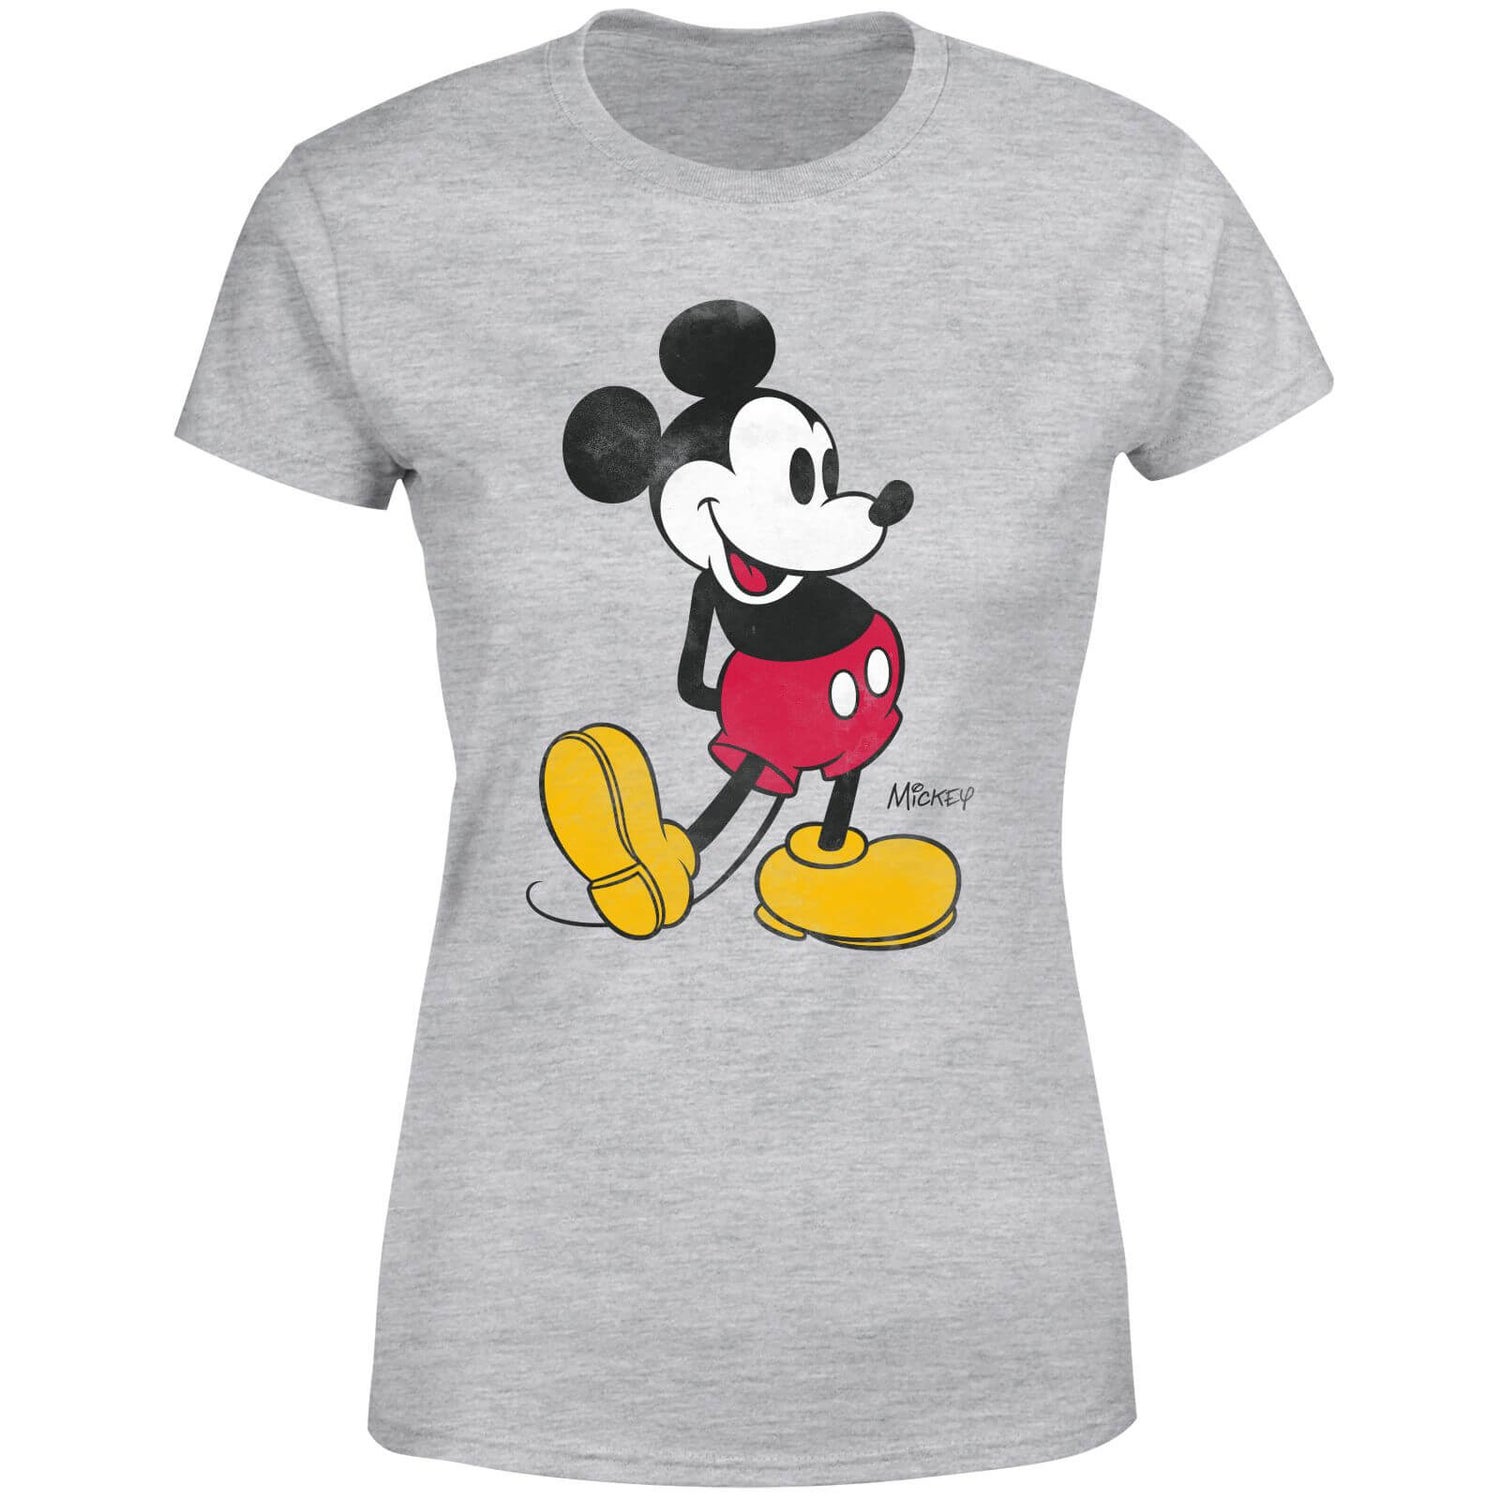 Disney Mickey Mouse Classic Kick Women's T-Shirt - Grey